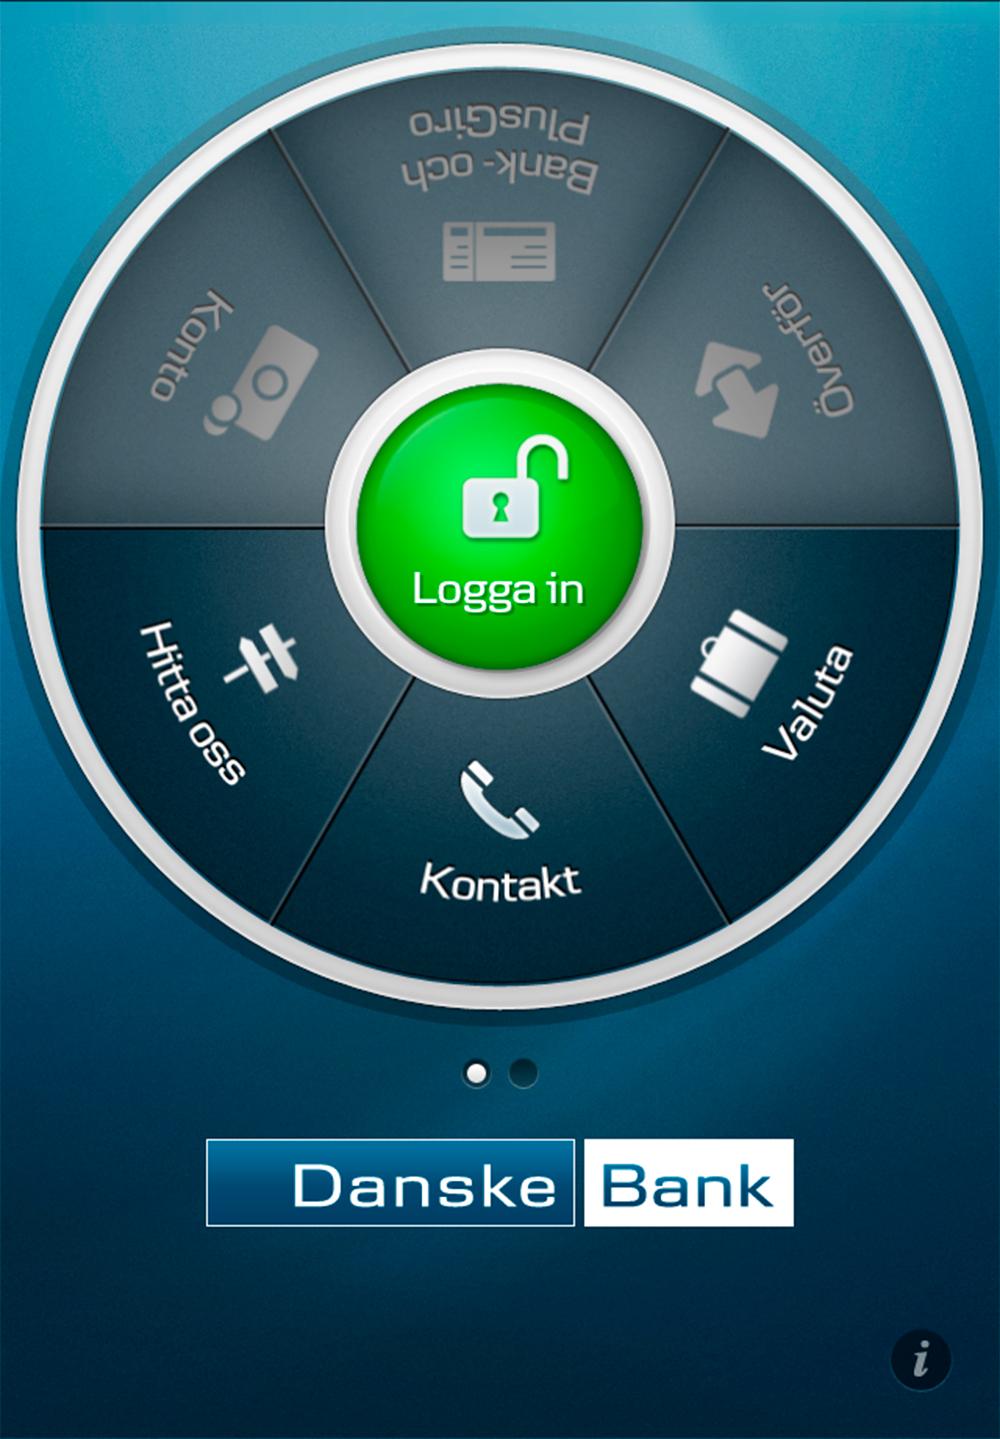 Danske Banks Iphone app. Datainspektionen uppmanar nu banken att höja säkerheten.